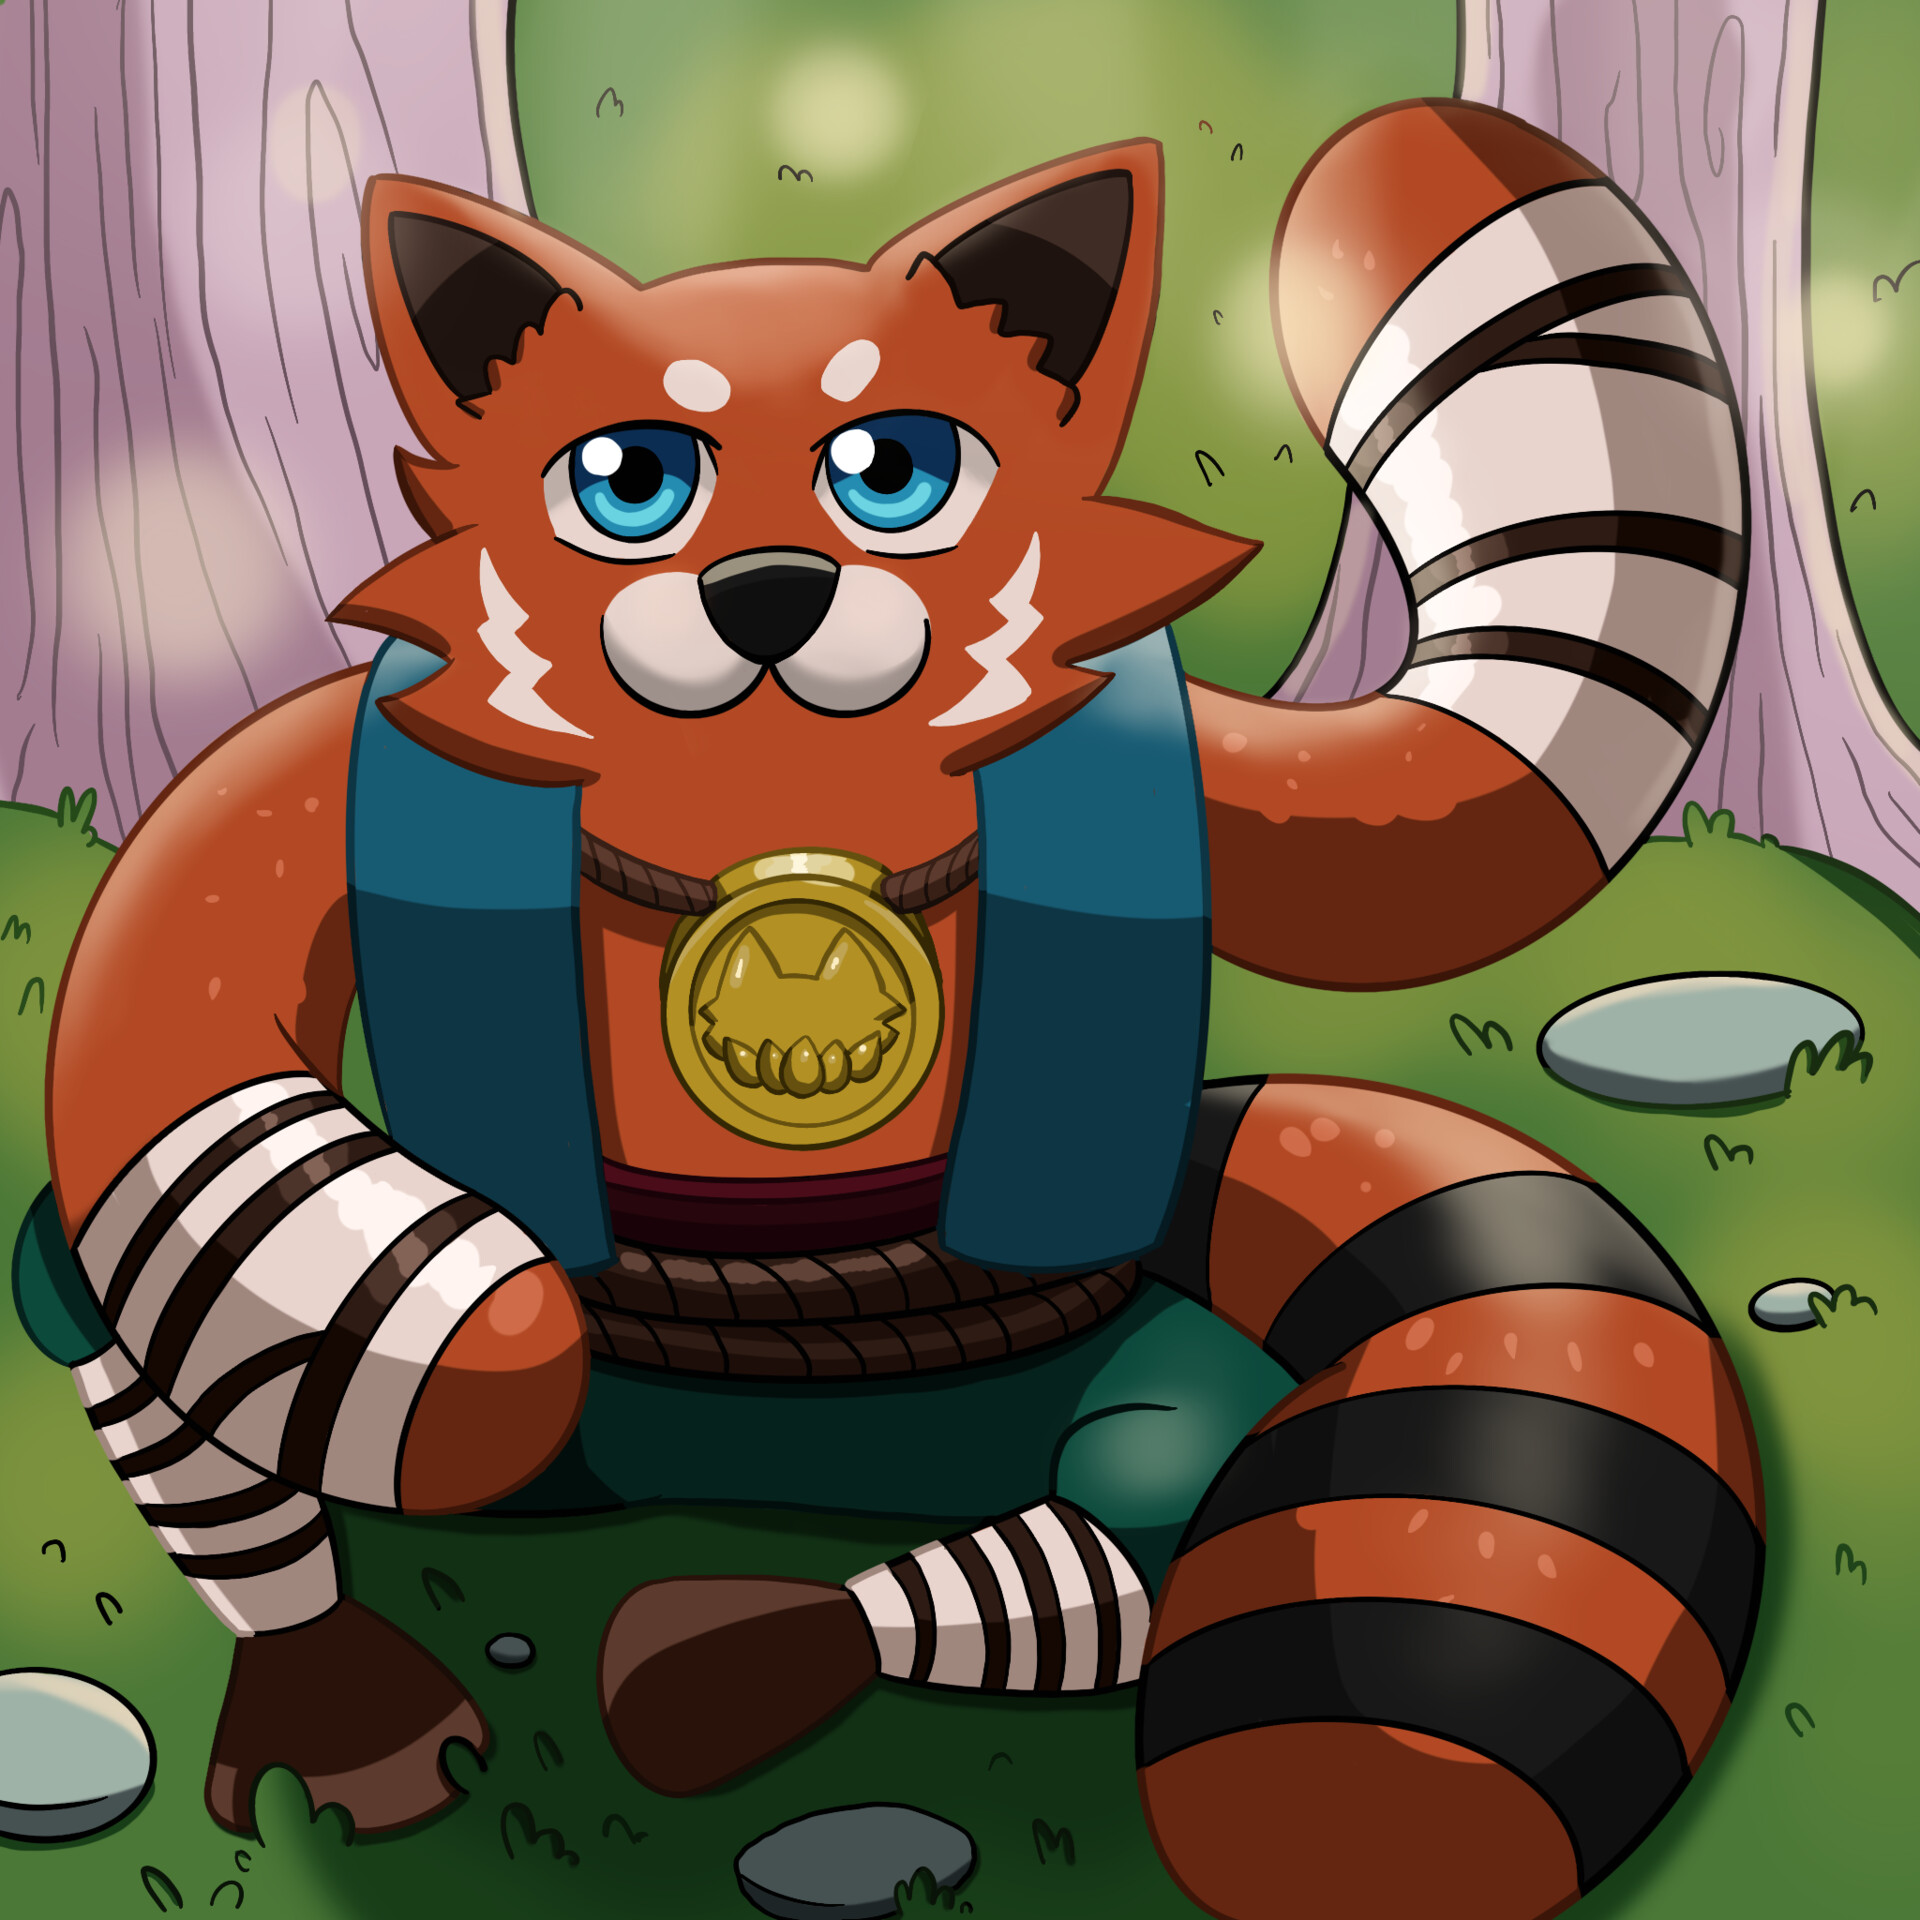 ArtStation - Red panda: Monk